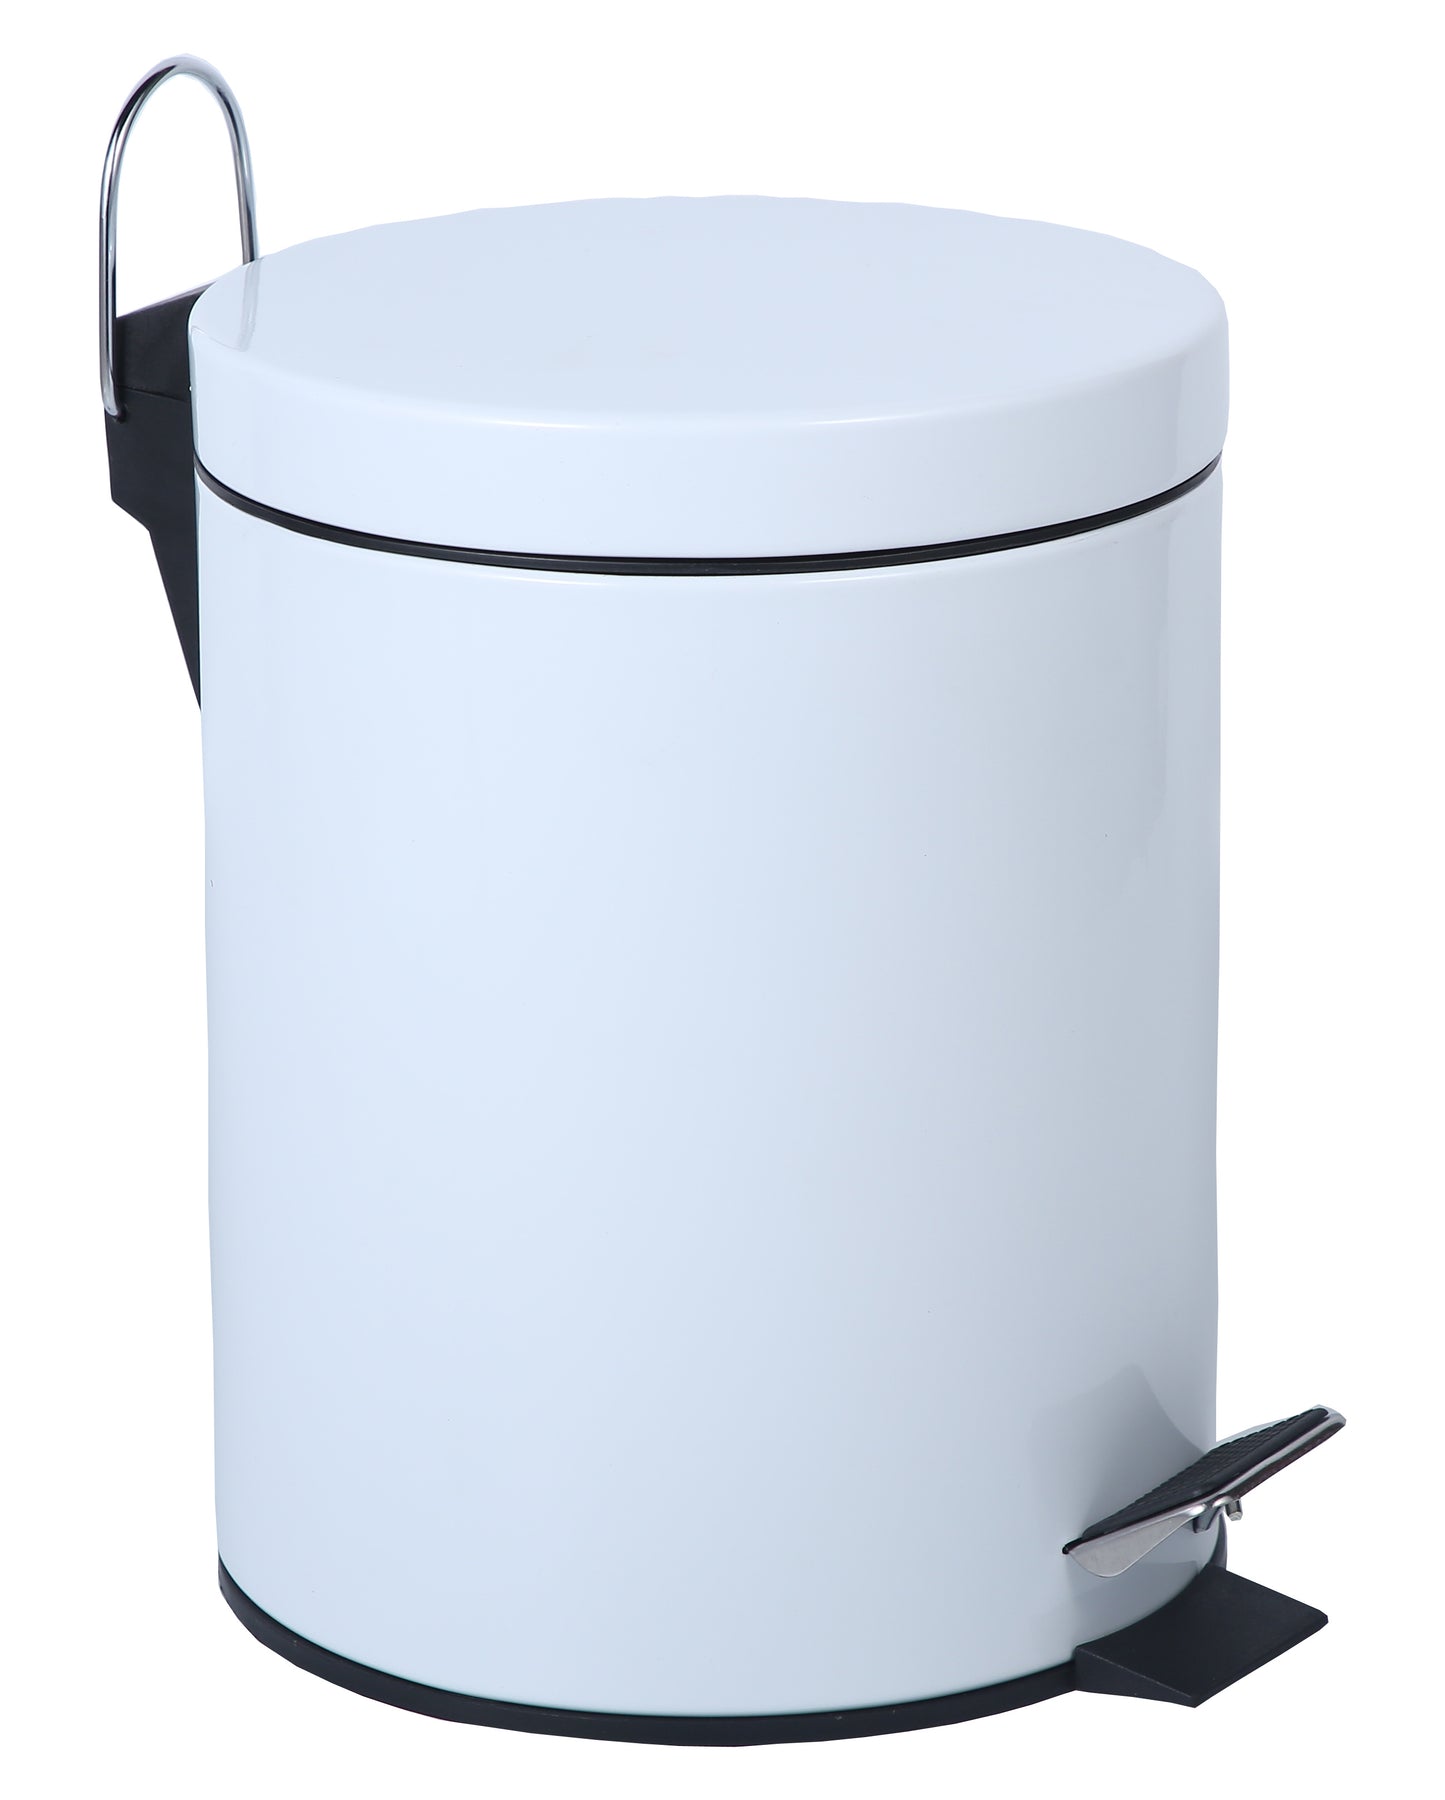 Buckingham White Powder Coated Pedal Bin Waste Trash Bin for Bathroom Kitchen Office 3 Litres